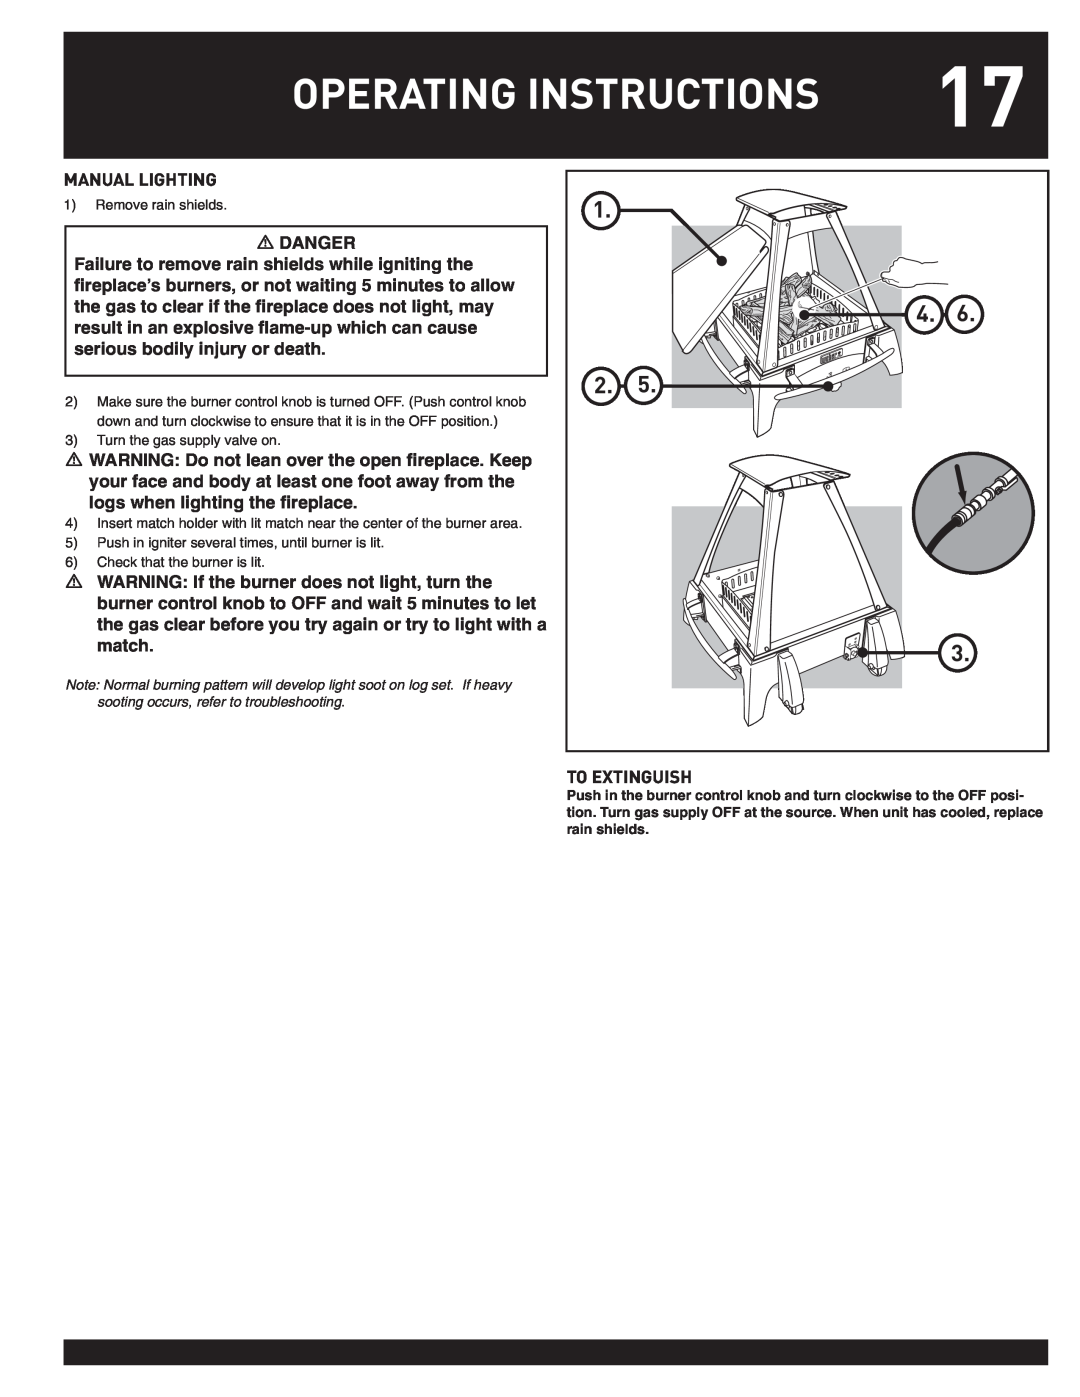 Weber FLAME manual Operating Instructions, Manual Lighting 